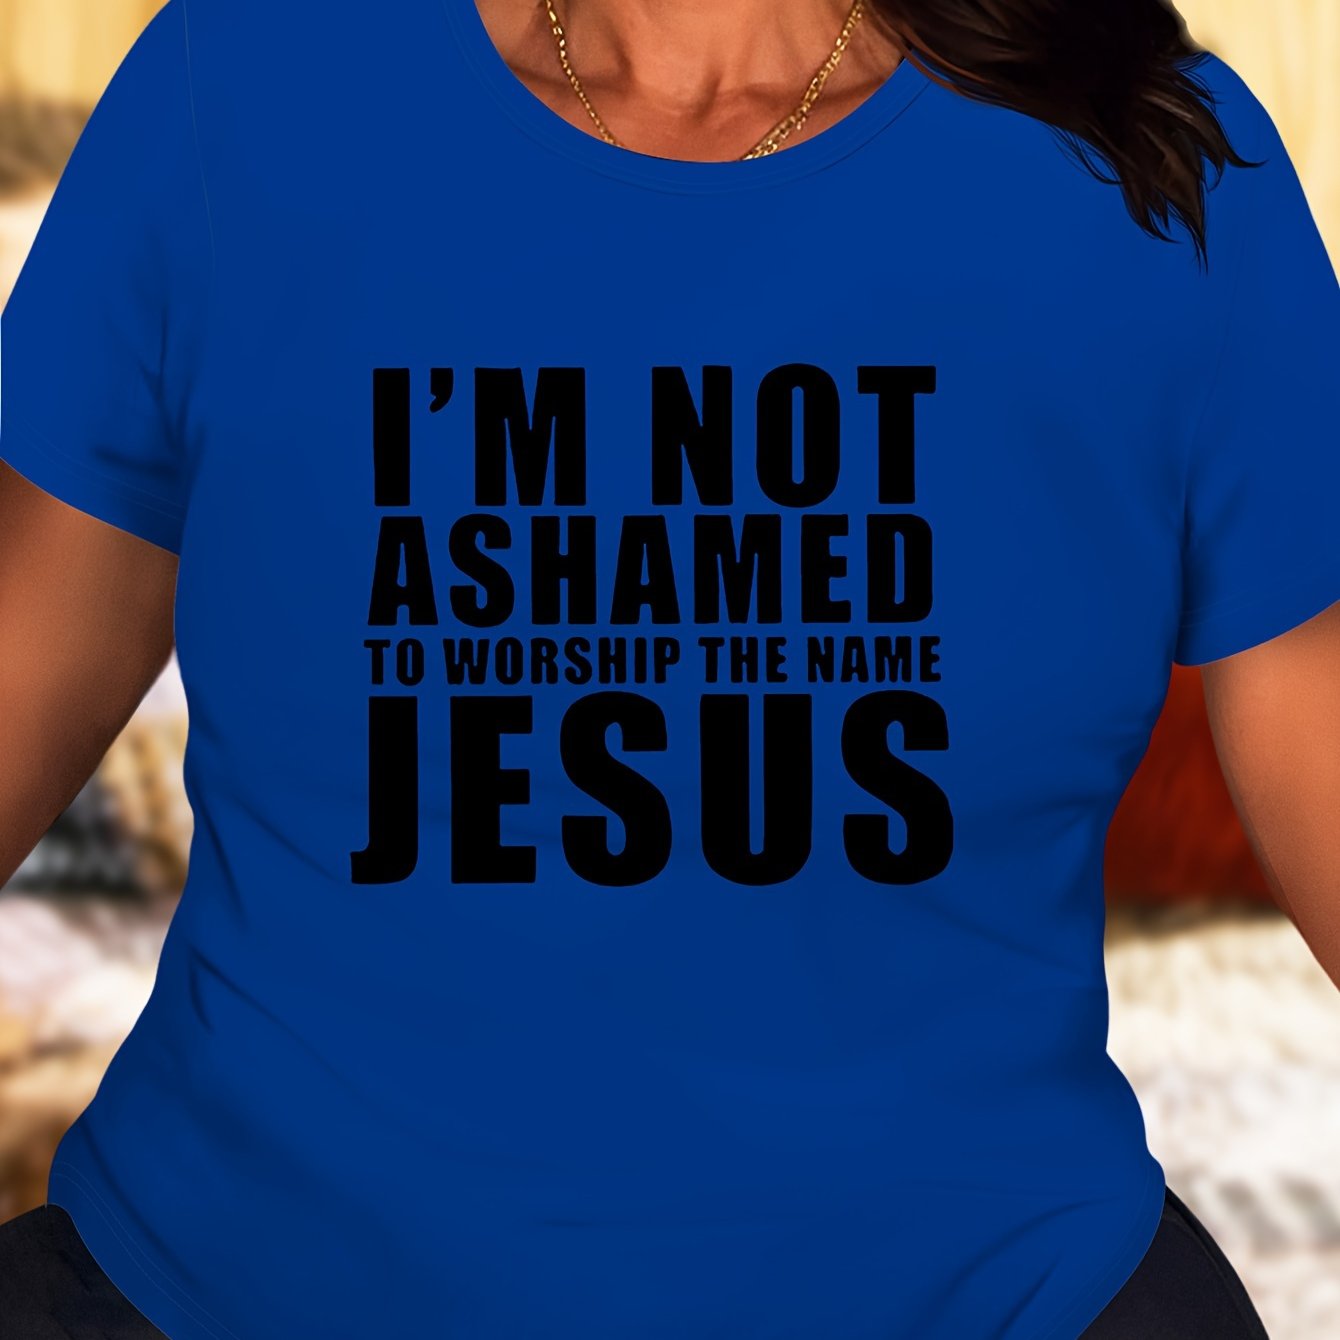 I'm Not Ashamed To Worship The Name Jesus Plus Size Women's Christian T-shirt claimedbygoddesigns